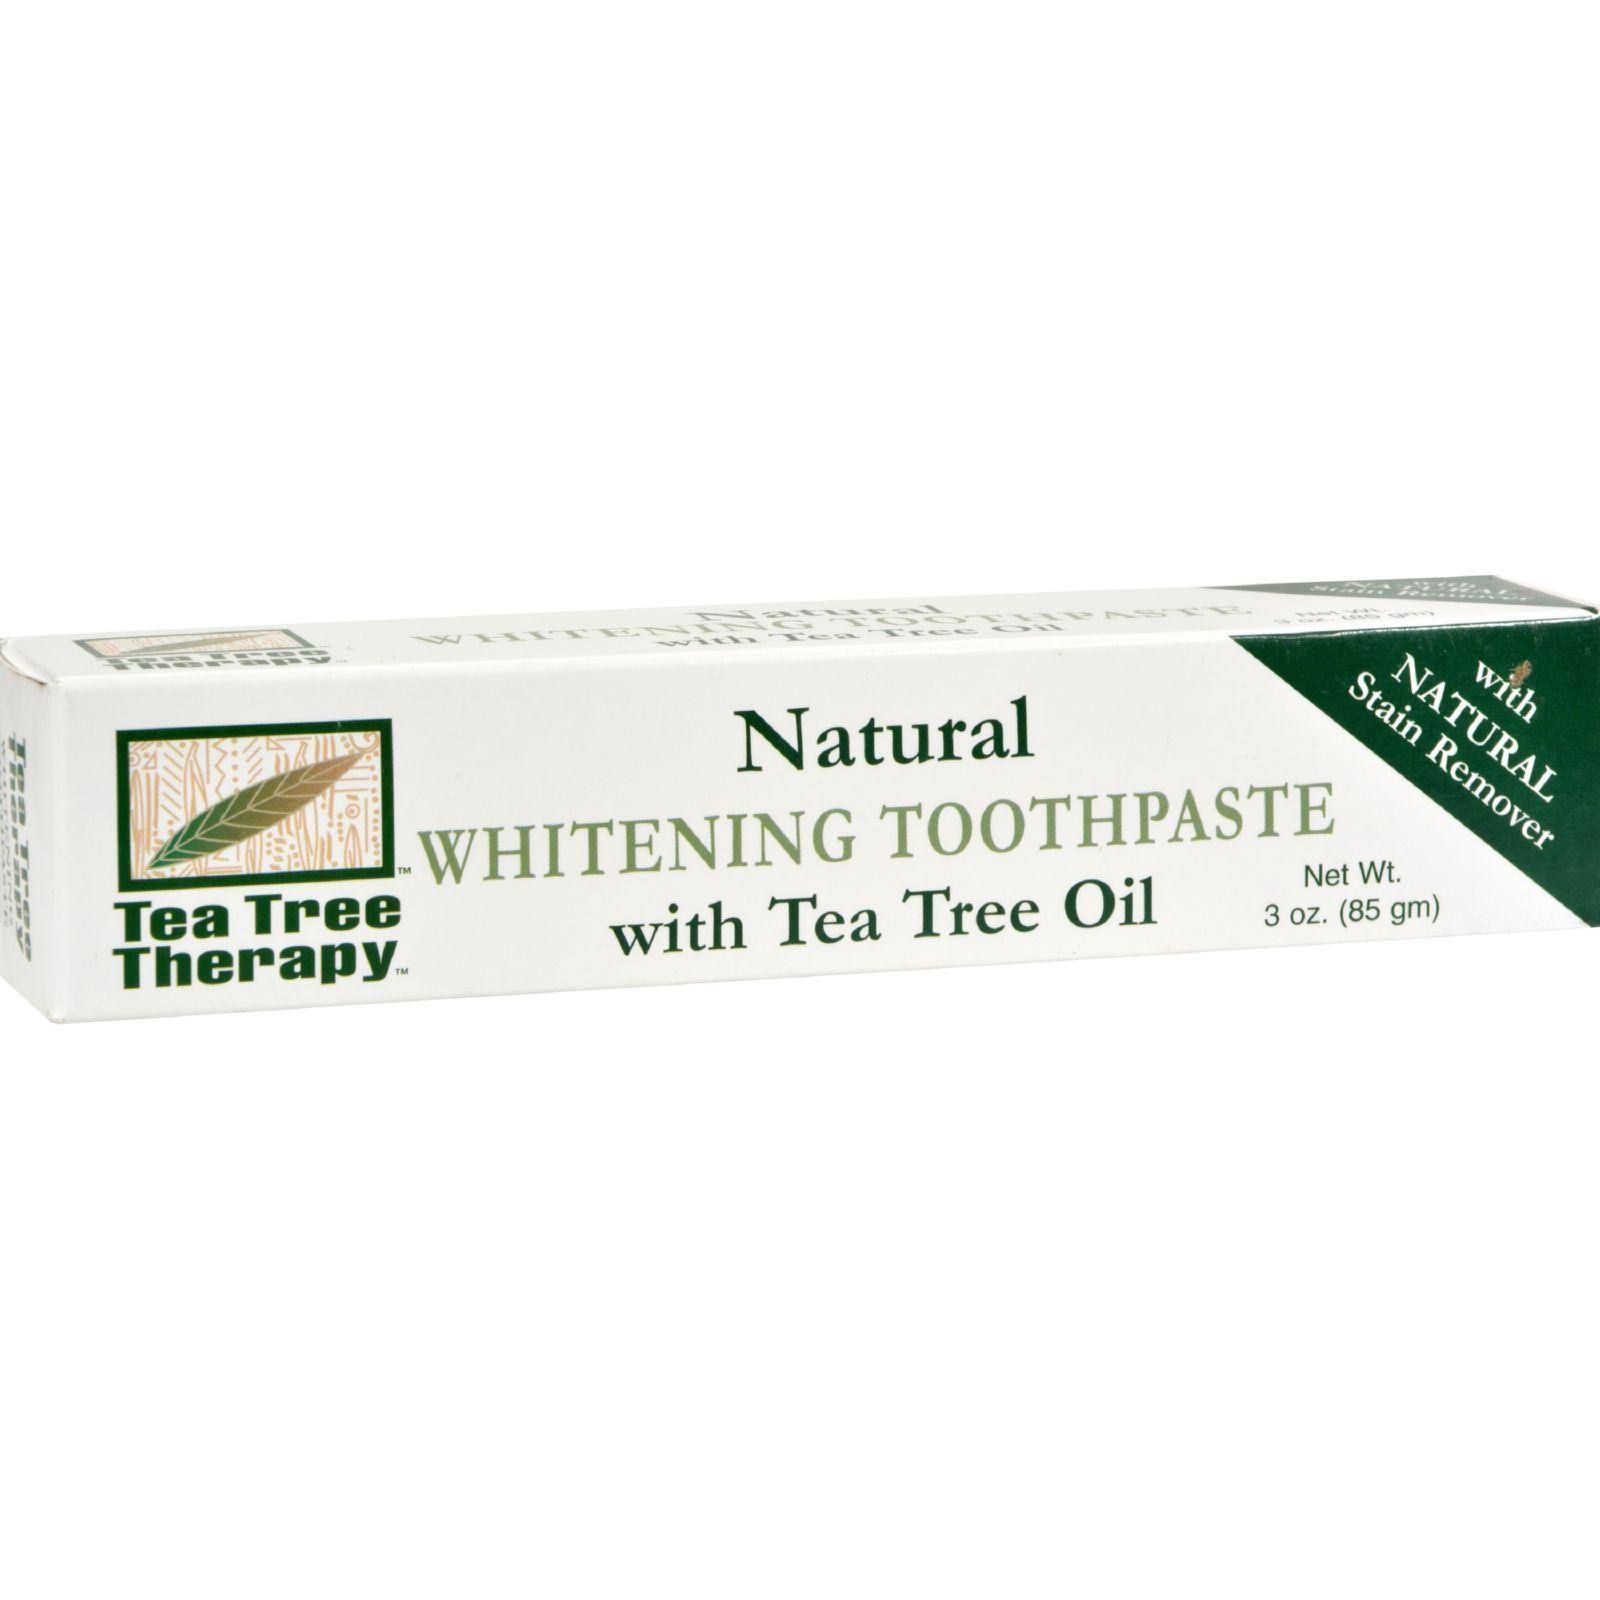 Tea Tree Therapy Whitening Toothpaste With Tea Tree Oil